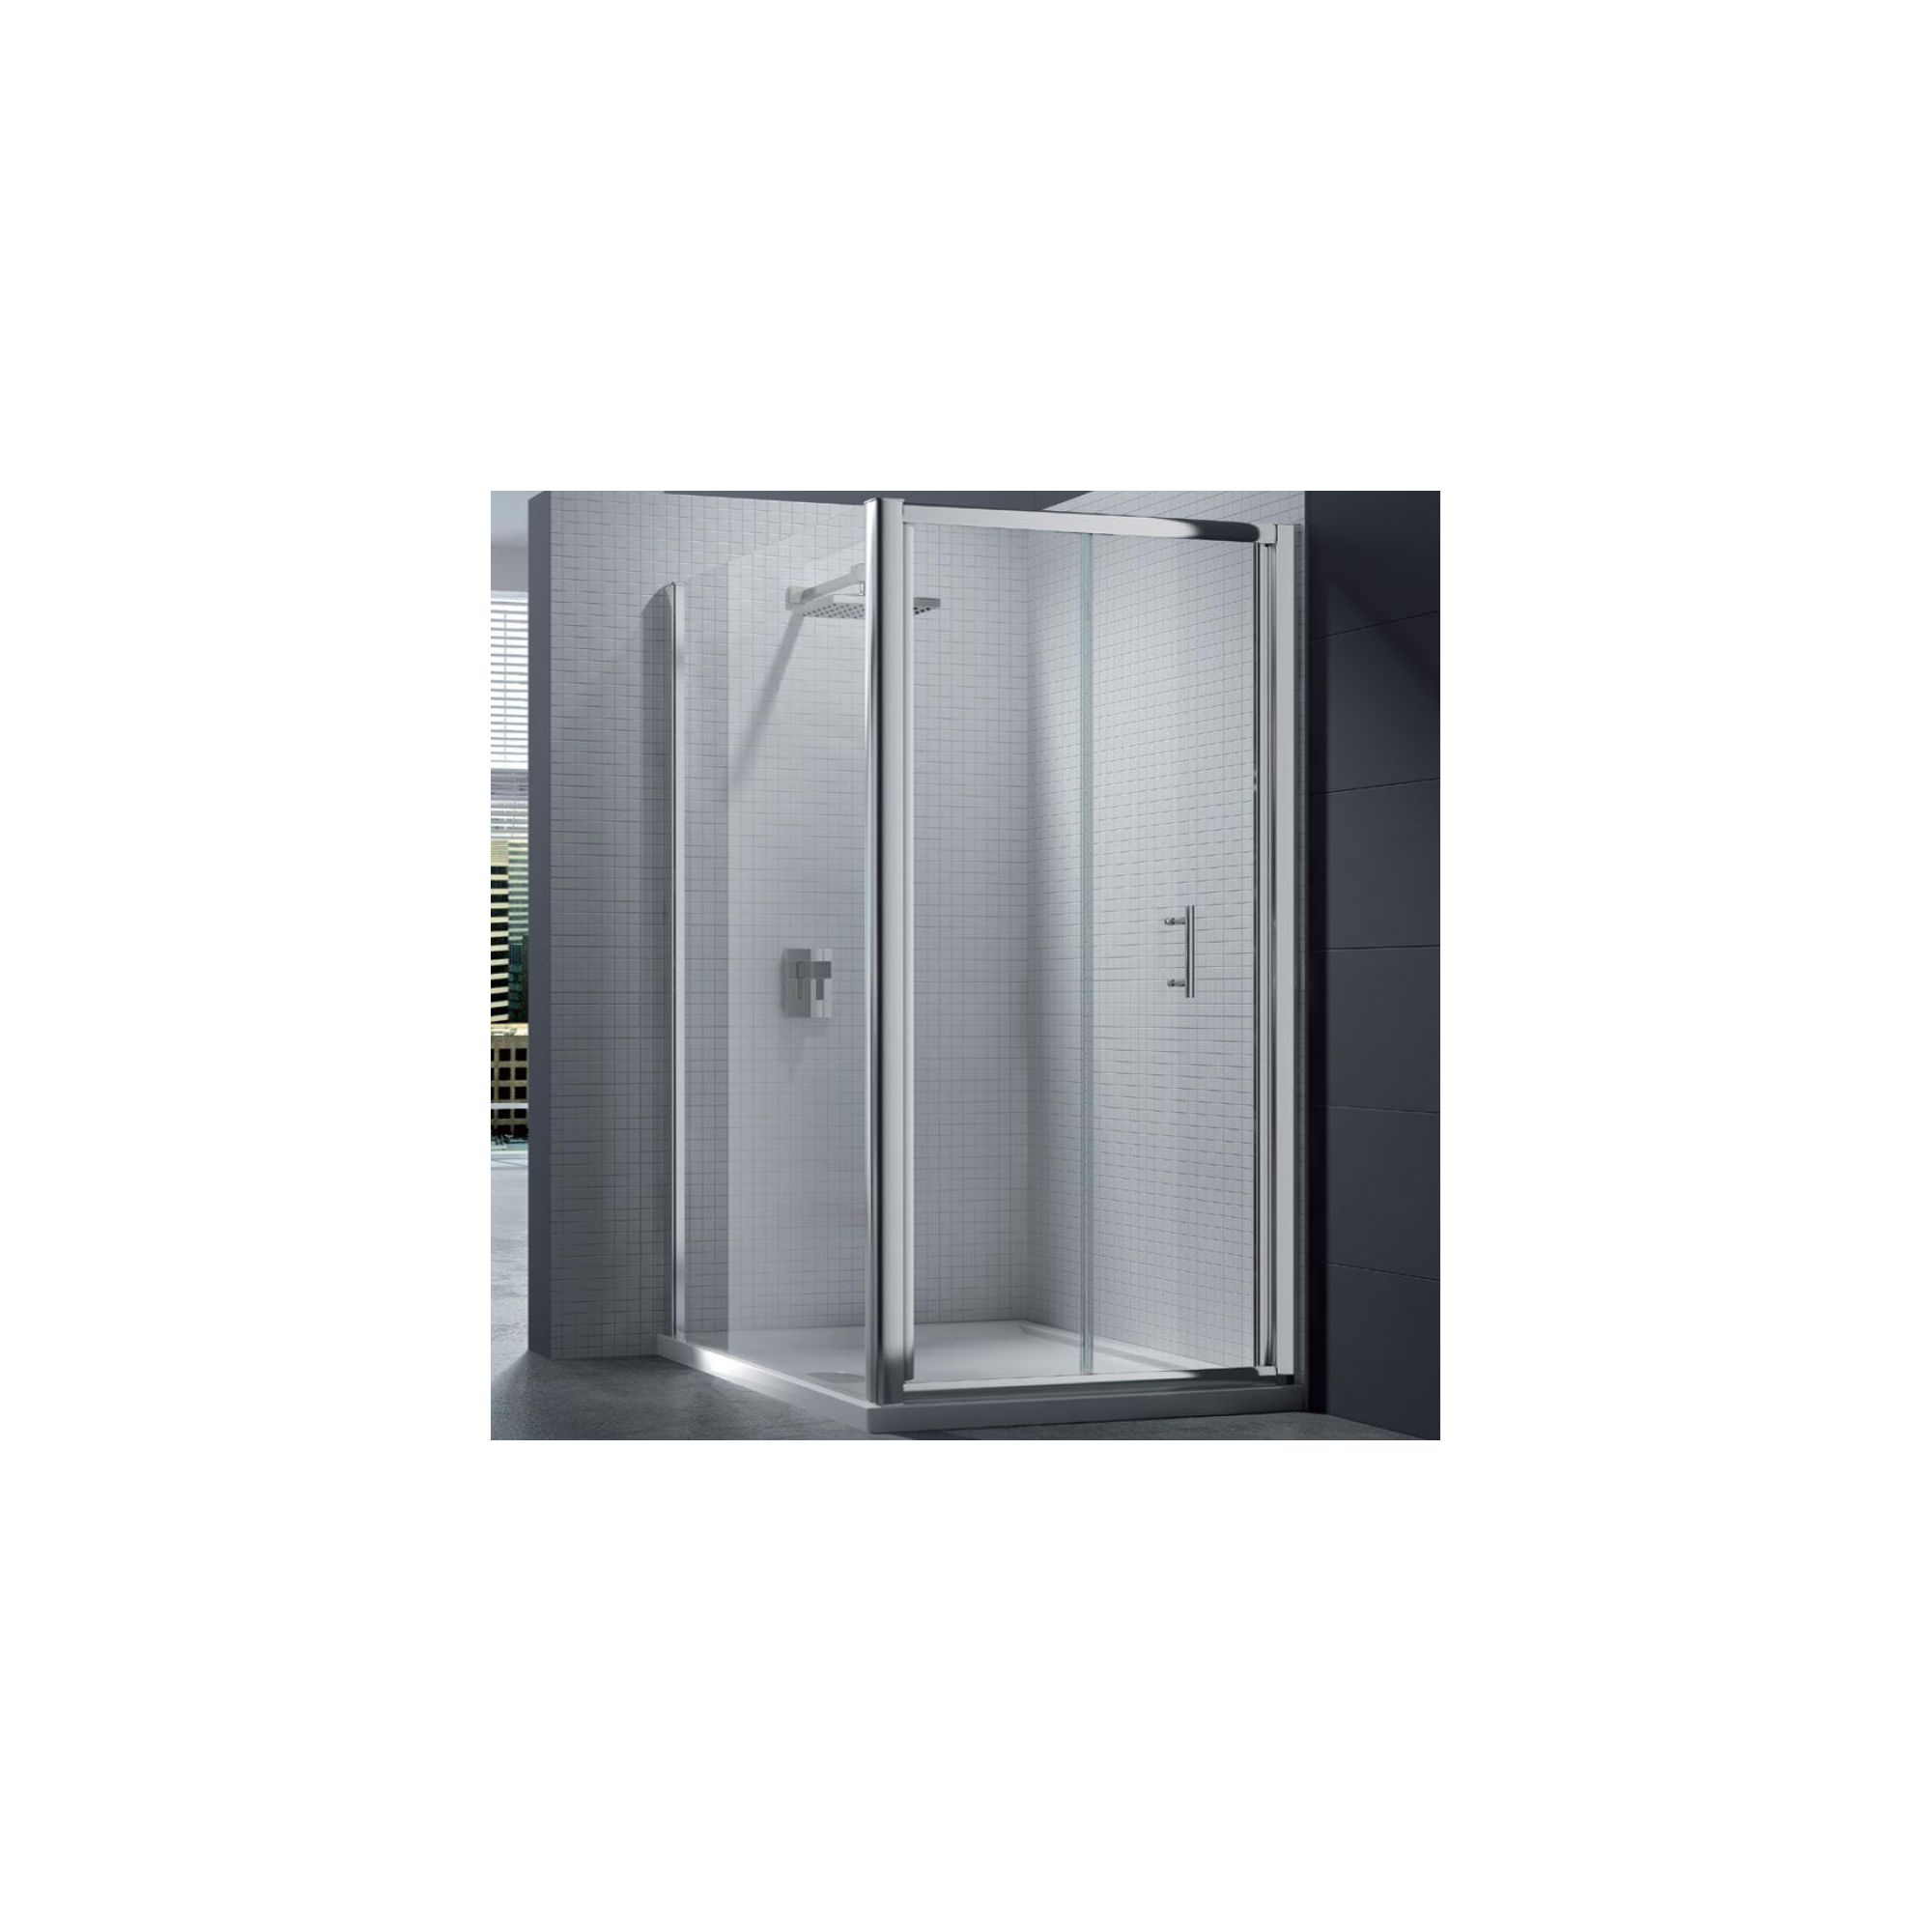 Merlyn Series 6 Bi-Fold Shower Door, 760/800mm Wide, Chrome Frame, 6mm Glass at Tesco Direct